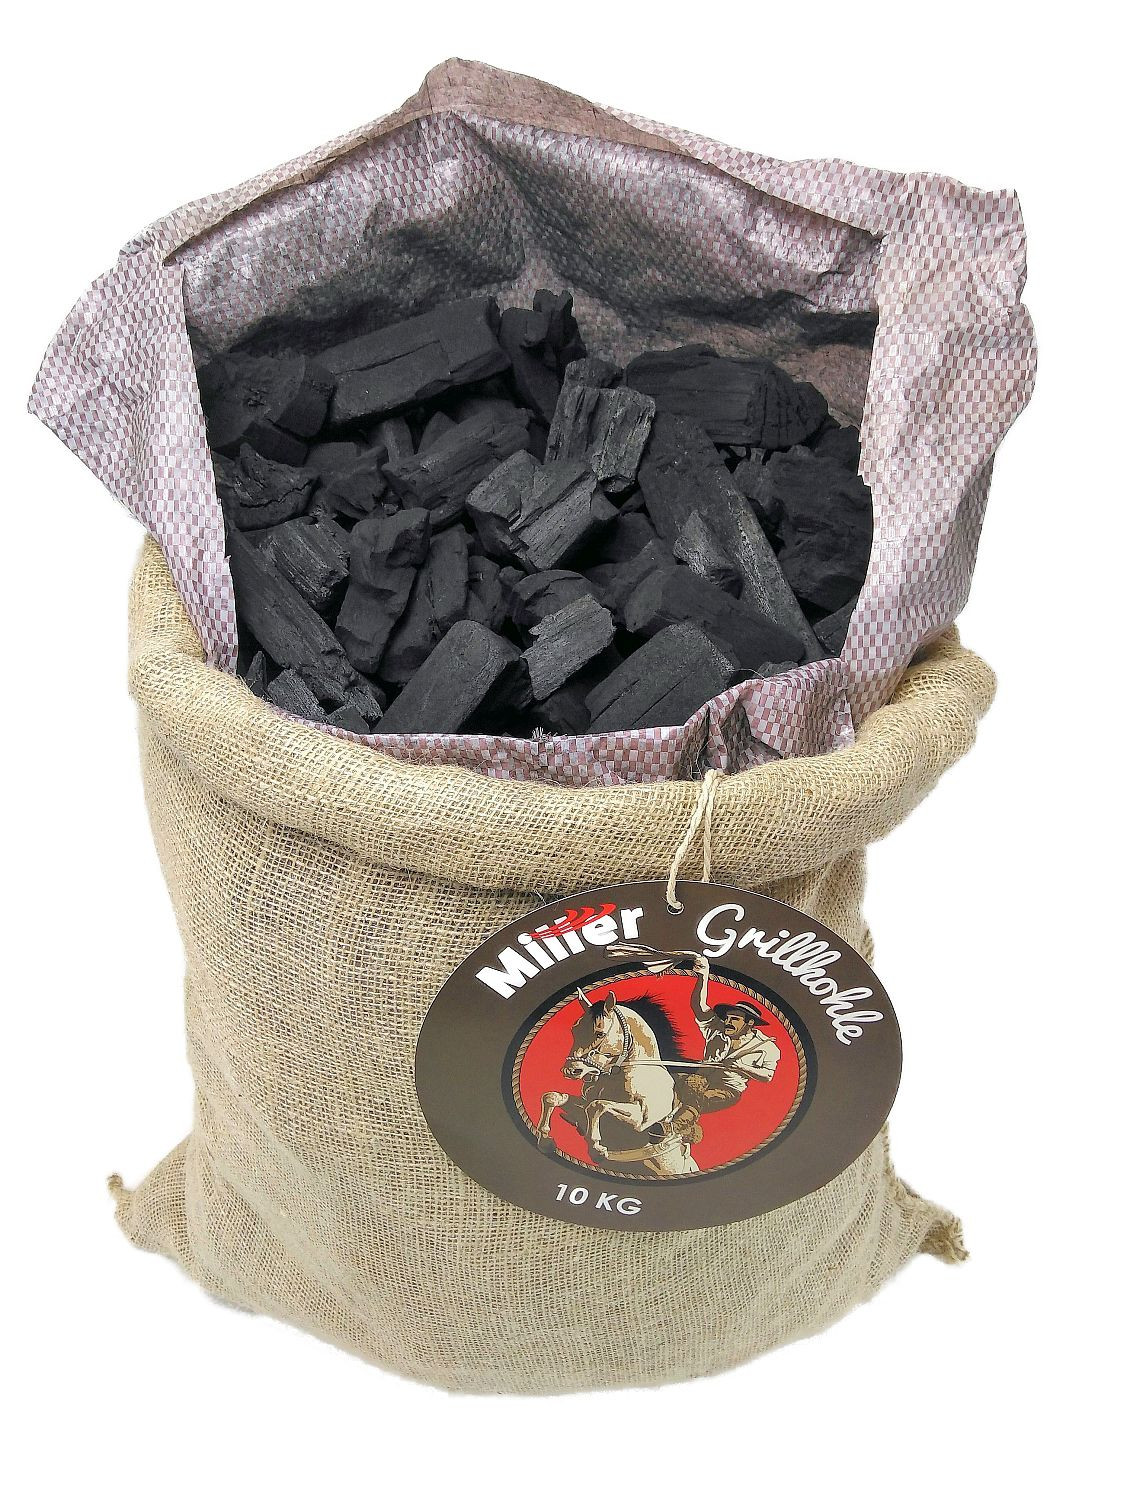 Holzkohle Grillkohle Miller 10kg Sack, nachhaltig, ökologisch, Sozial aus Plantagenanbau 